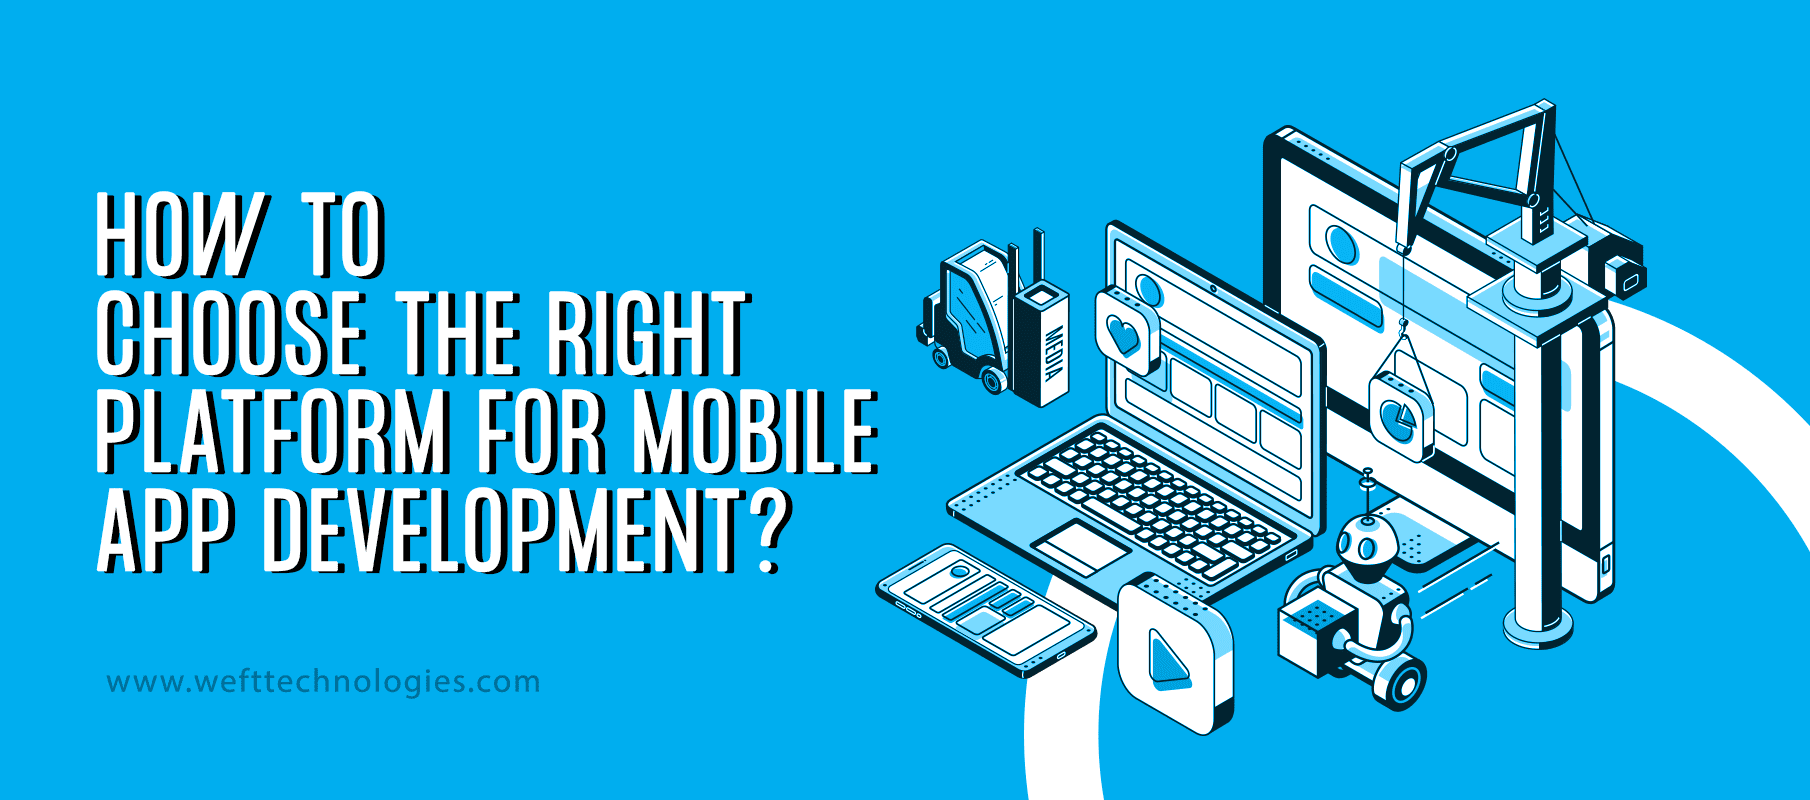 8 Essential Factors to Choose the Right Platform for Mobile App Development